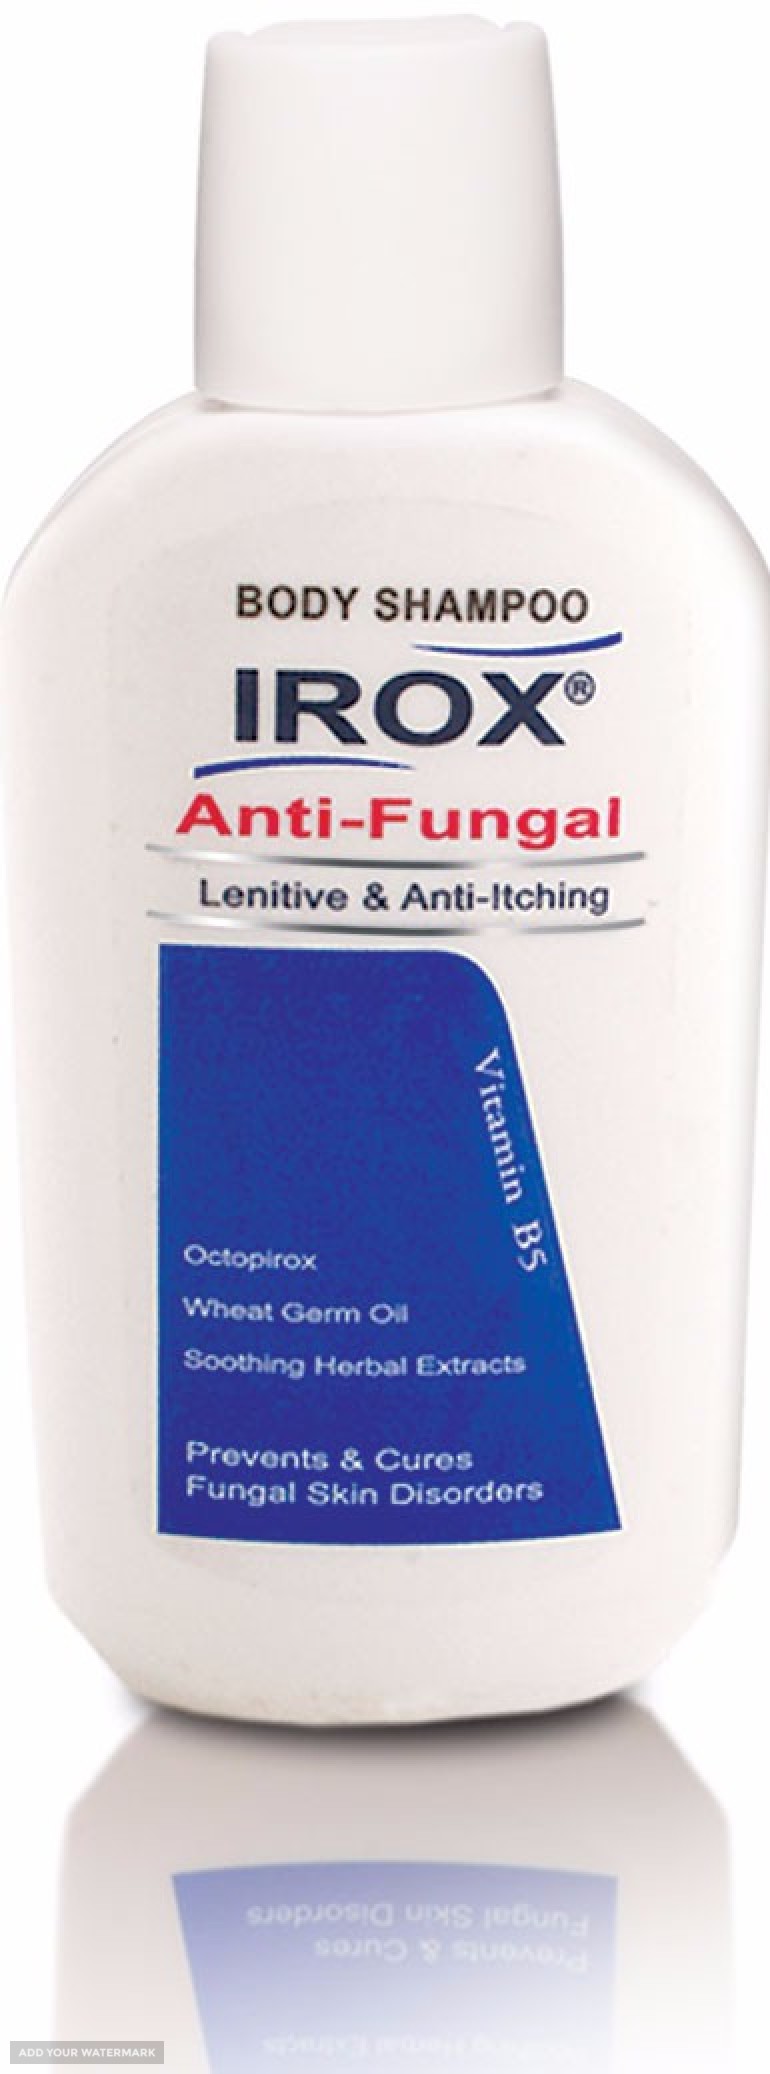 anti-fungal shampoo Body shampoo for export